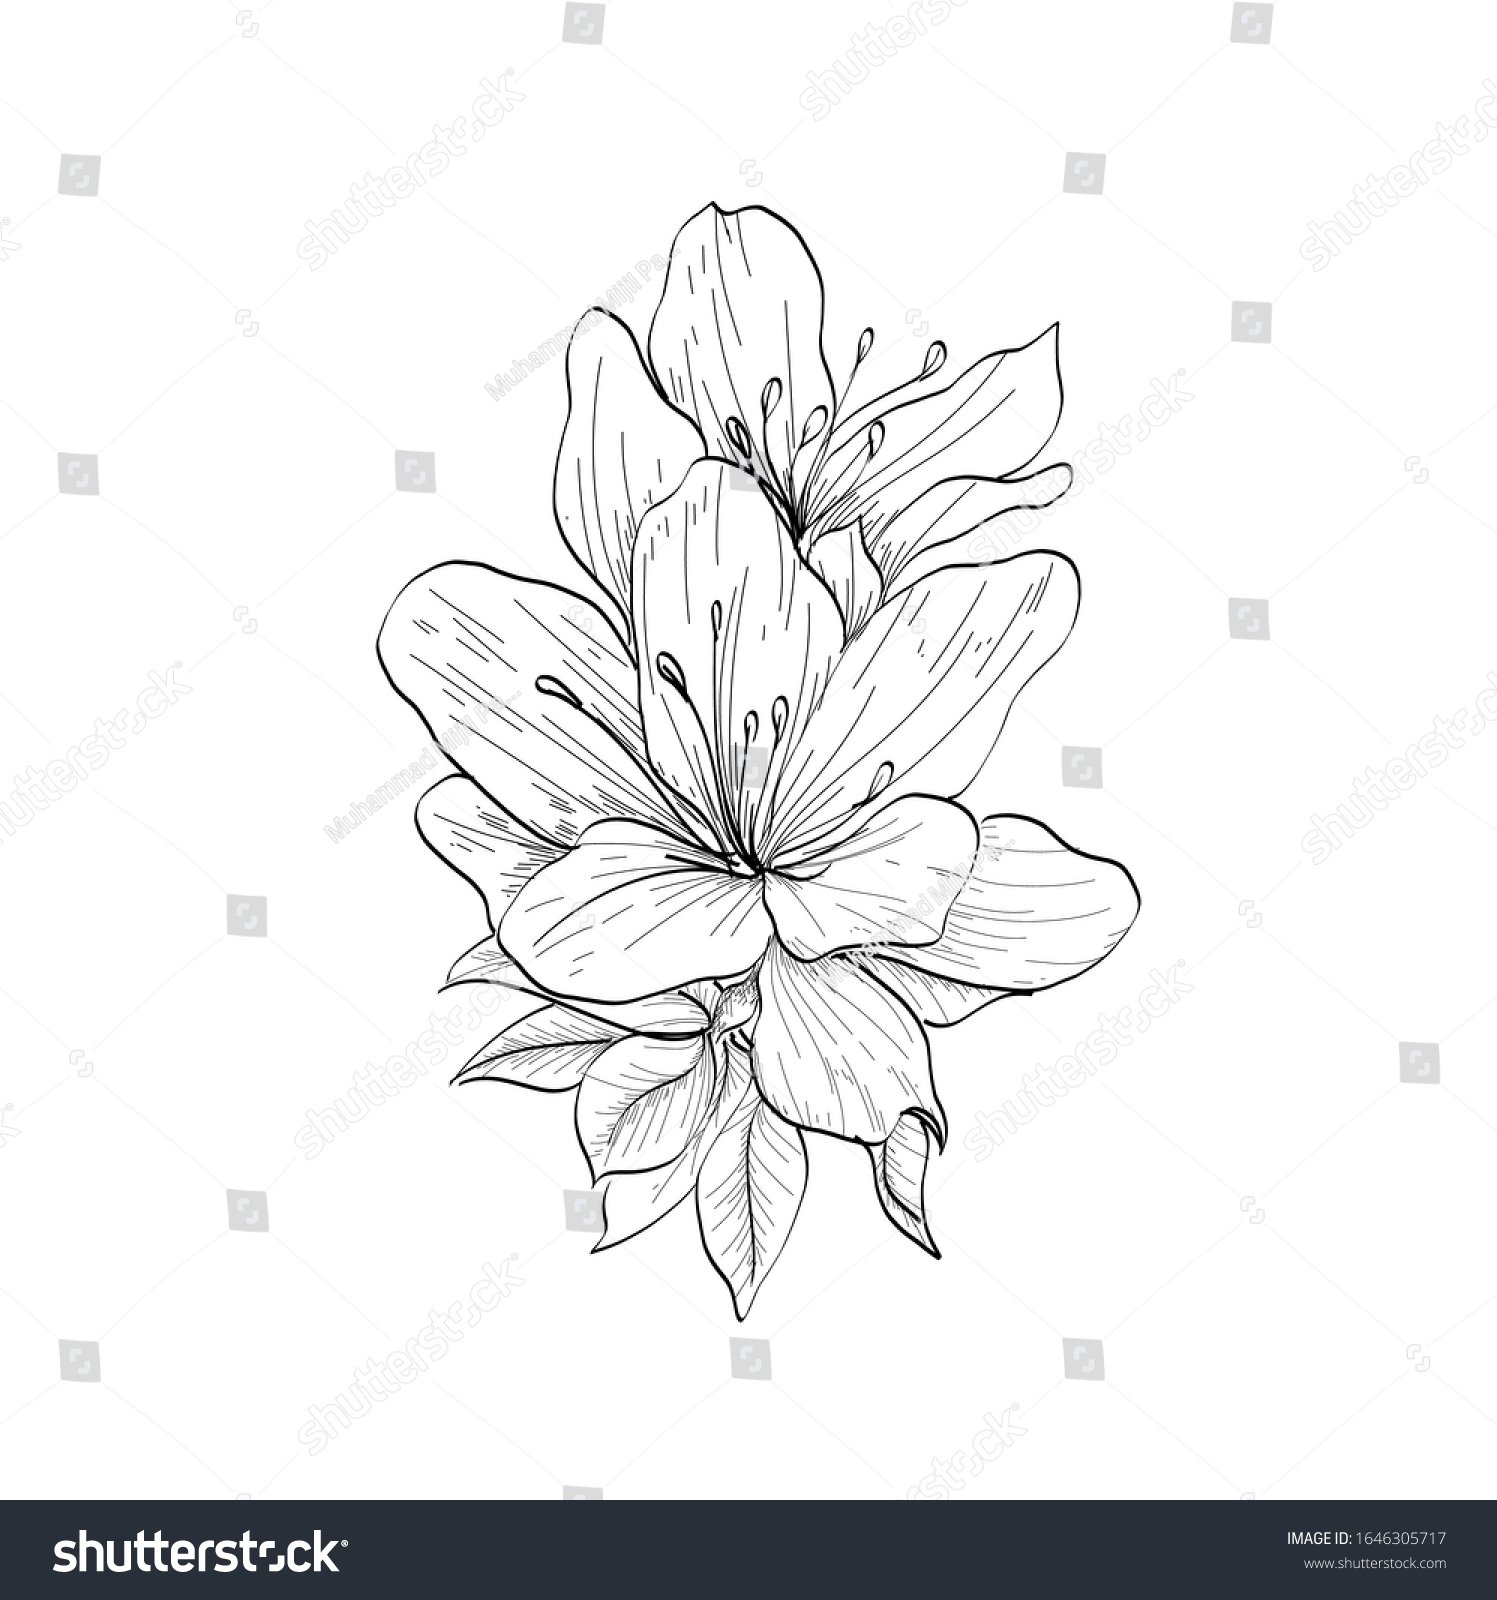 Vector Hand Drawn Plants Botanical Sketch Stock Vector (Royalty Free ...